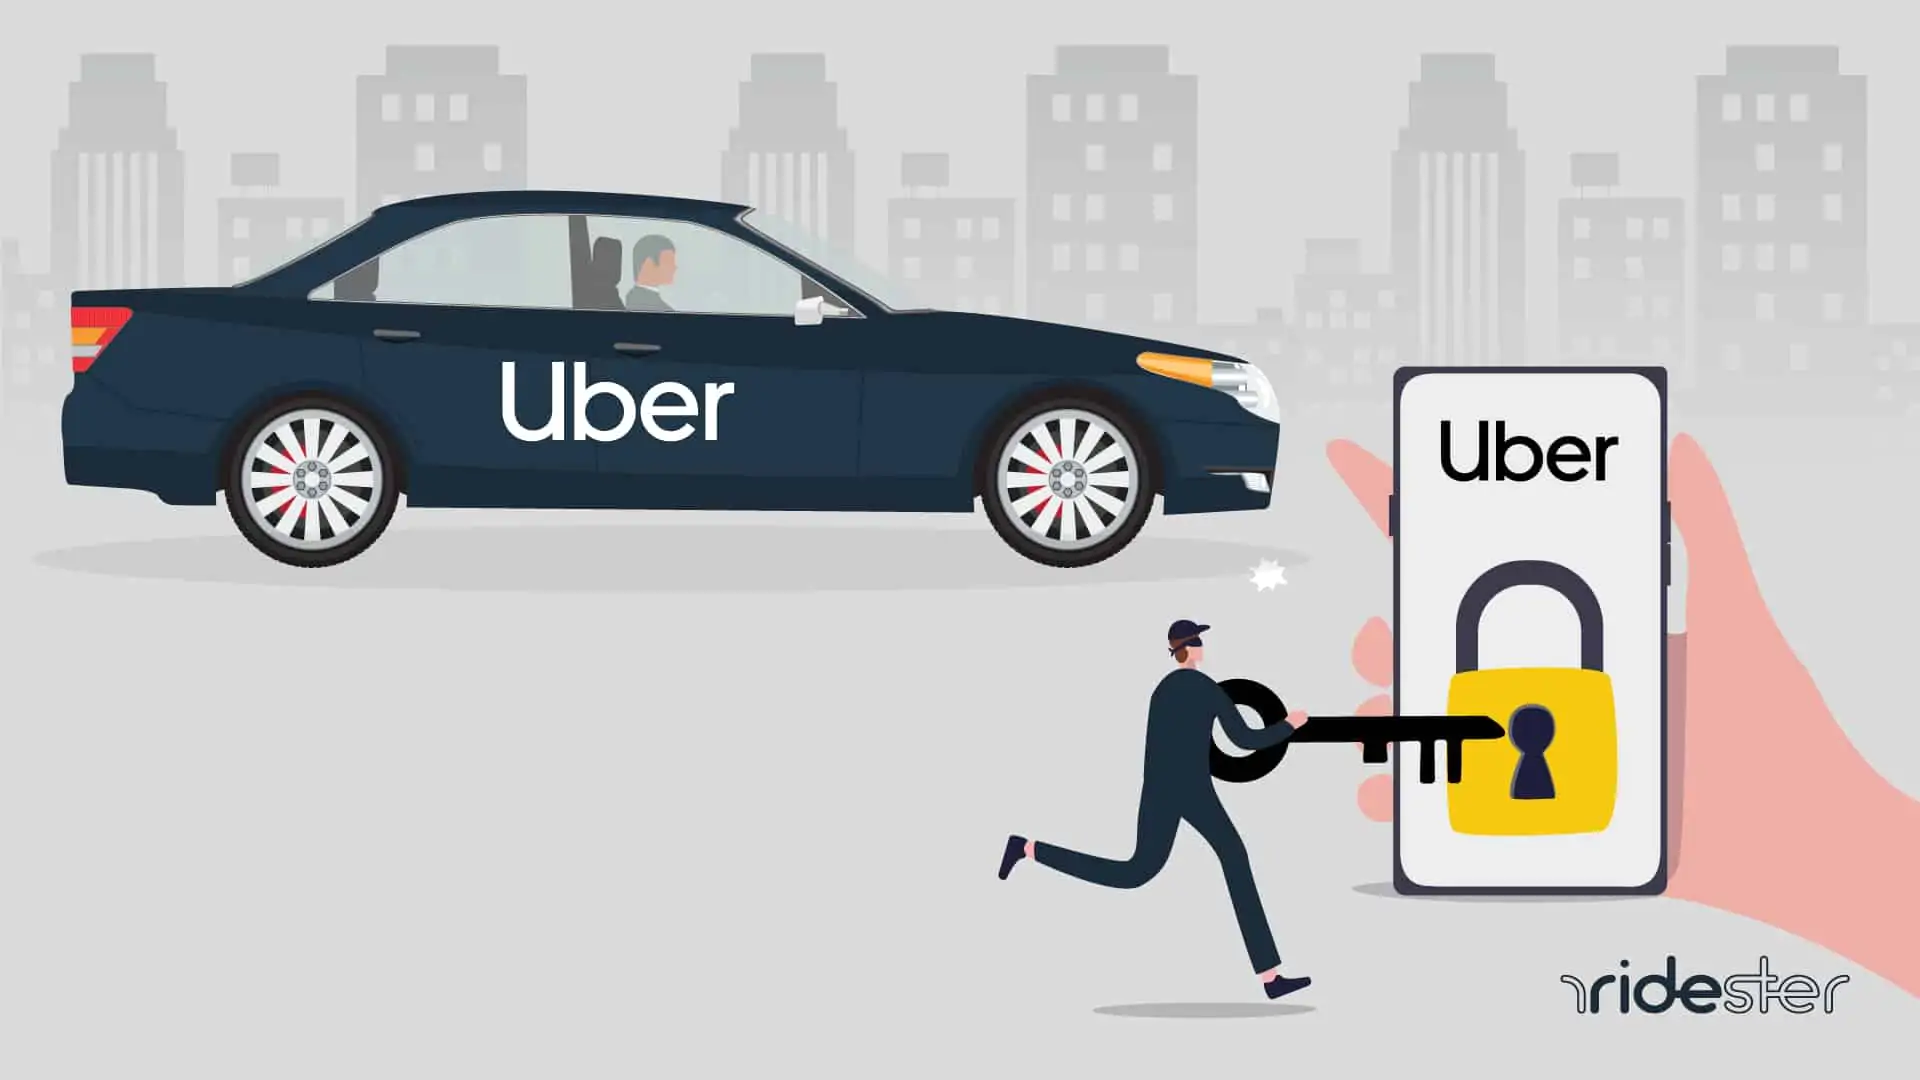 hacker holding laptop in front of Uber ride - header image for uber free ride hack post